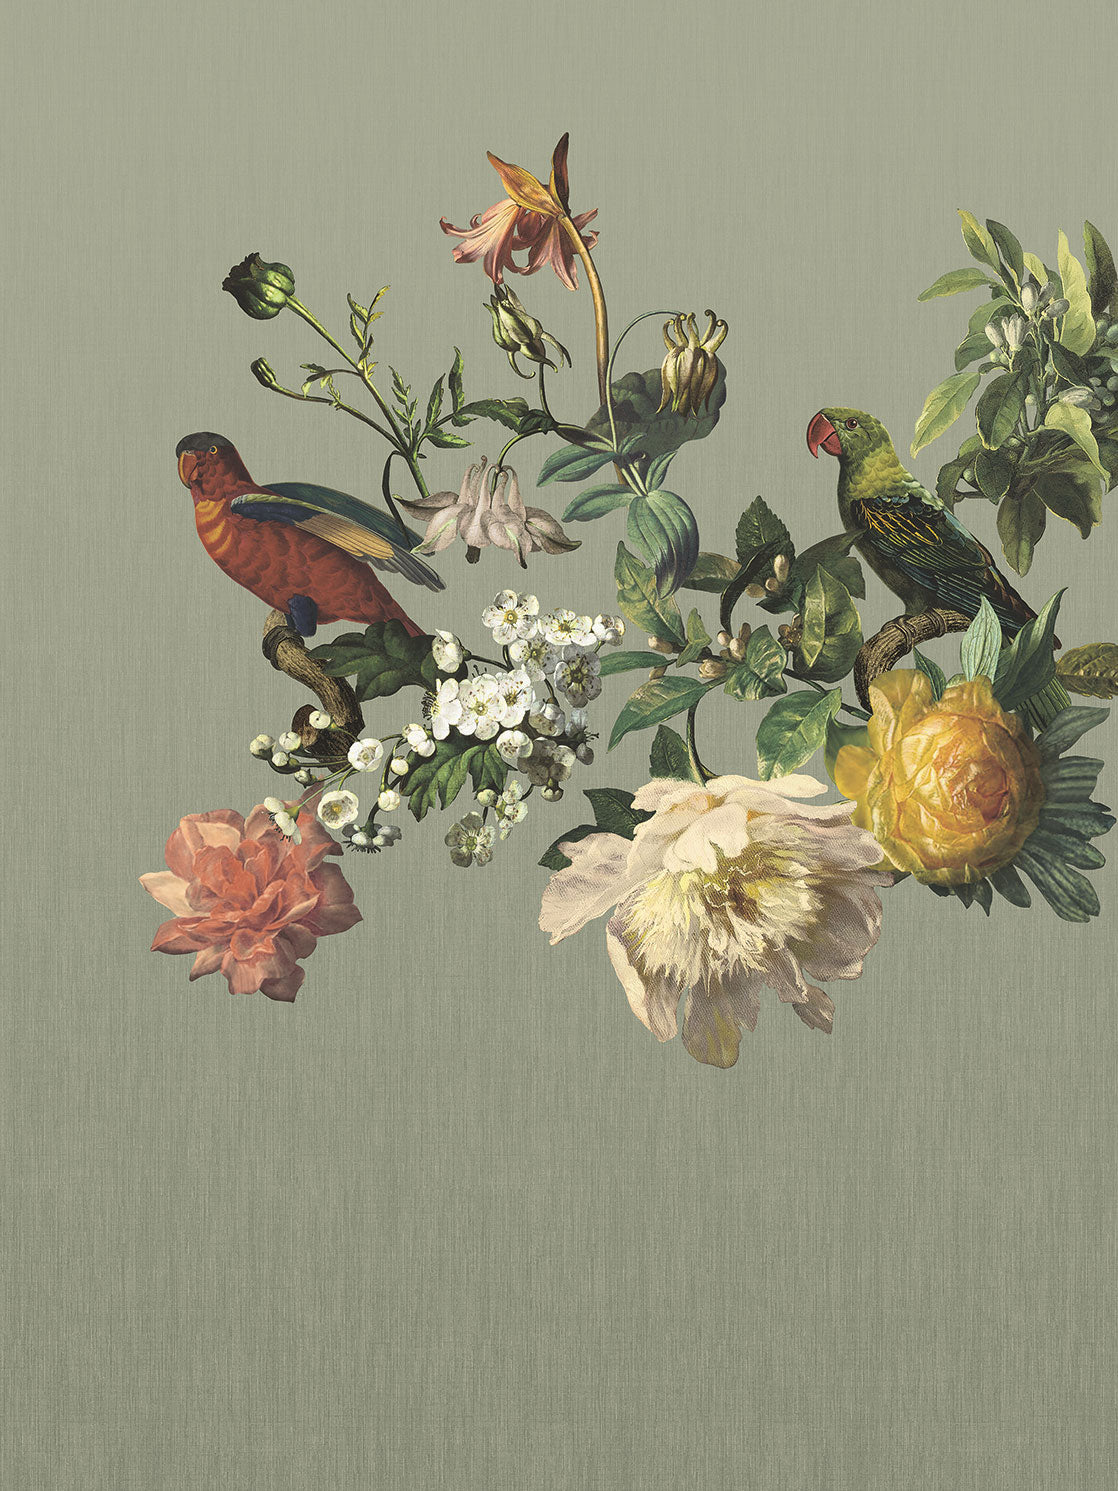 Museum Botanical Floral & Parrot mural